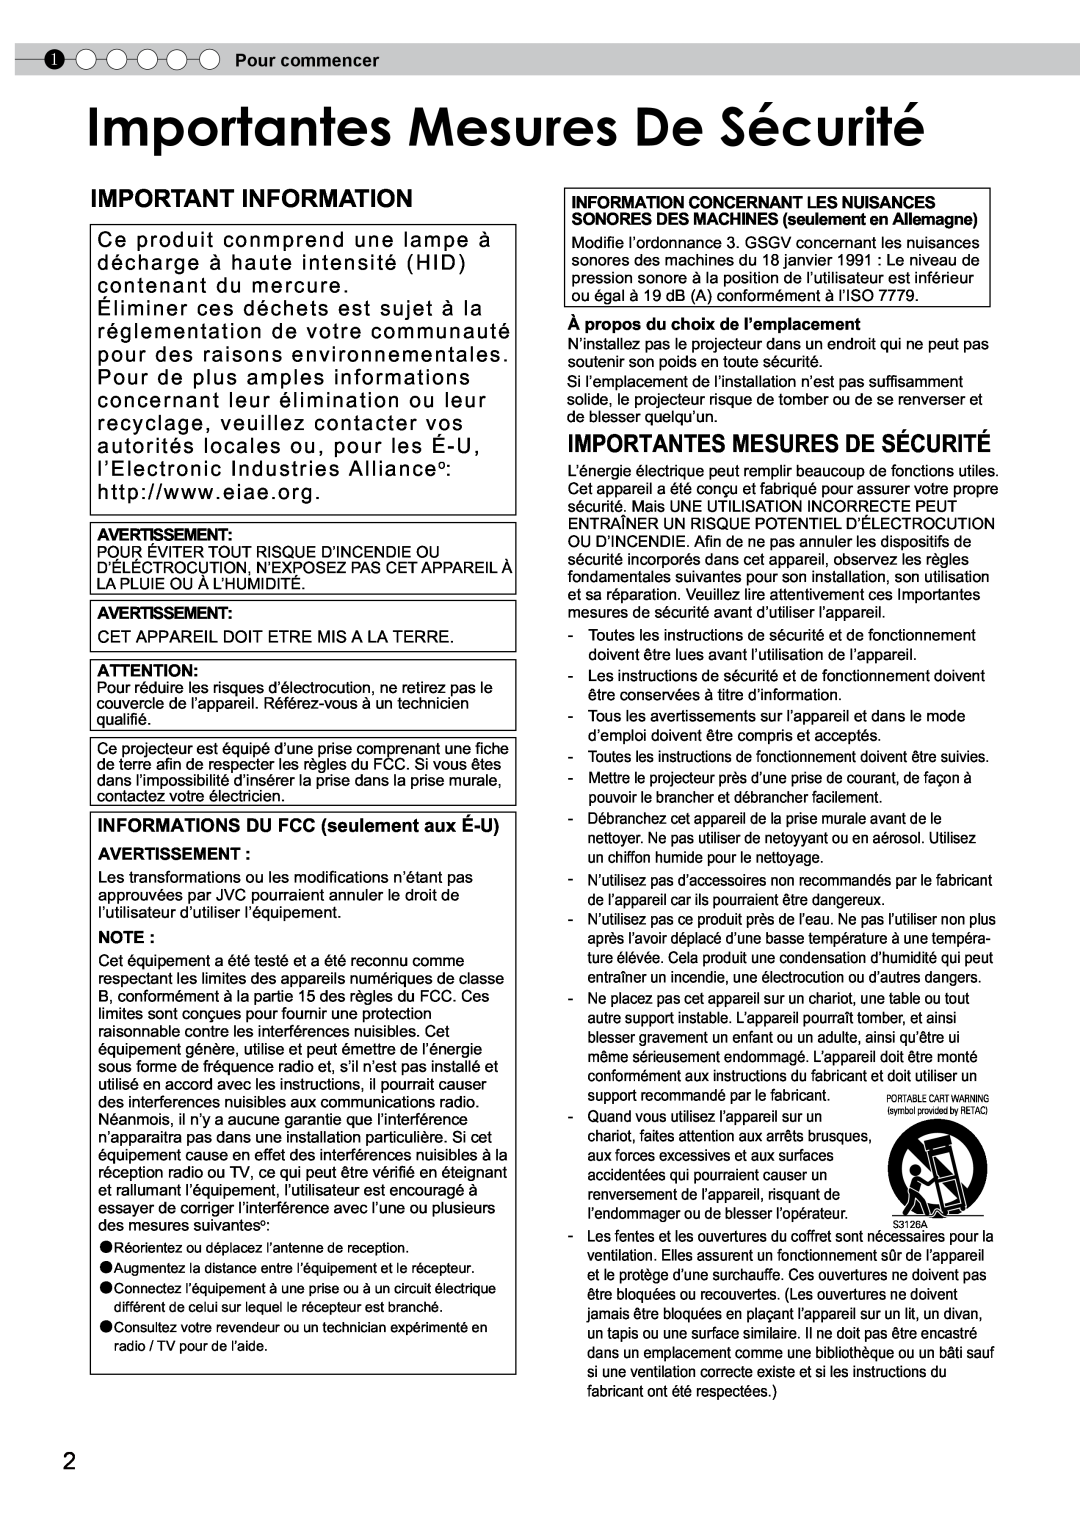 JVC DLA-HD750 manual Importantesortantes MesuresMesuresDeDeSécuritéSécurité, Important Information 